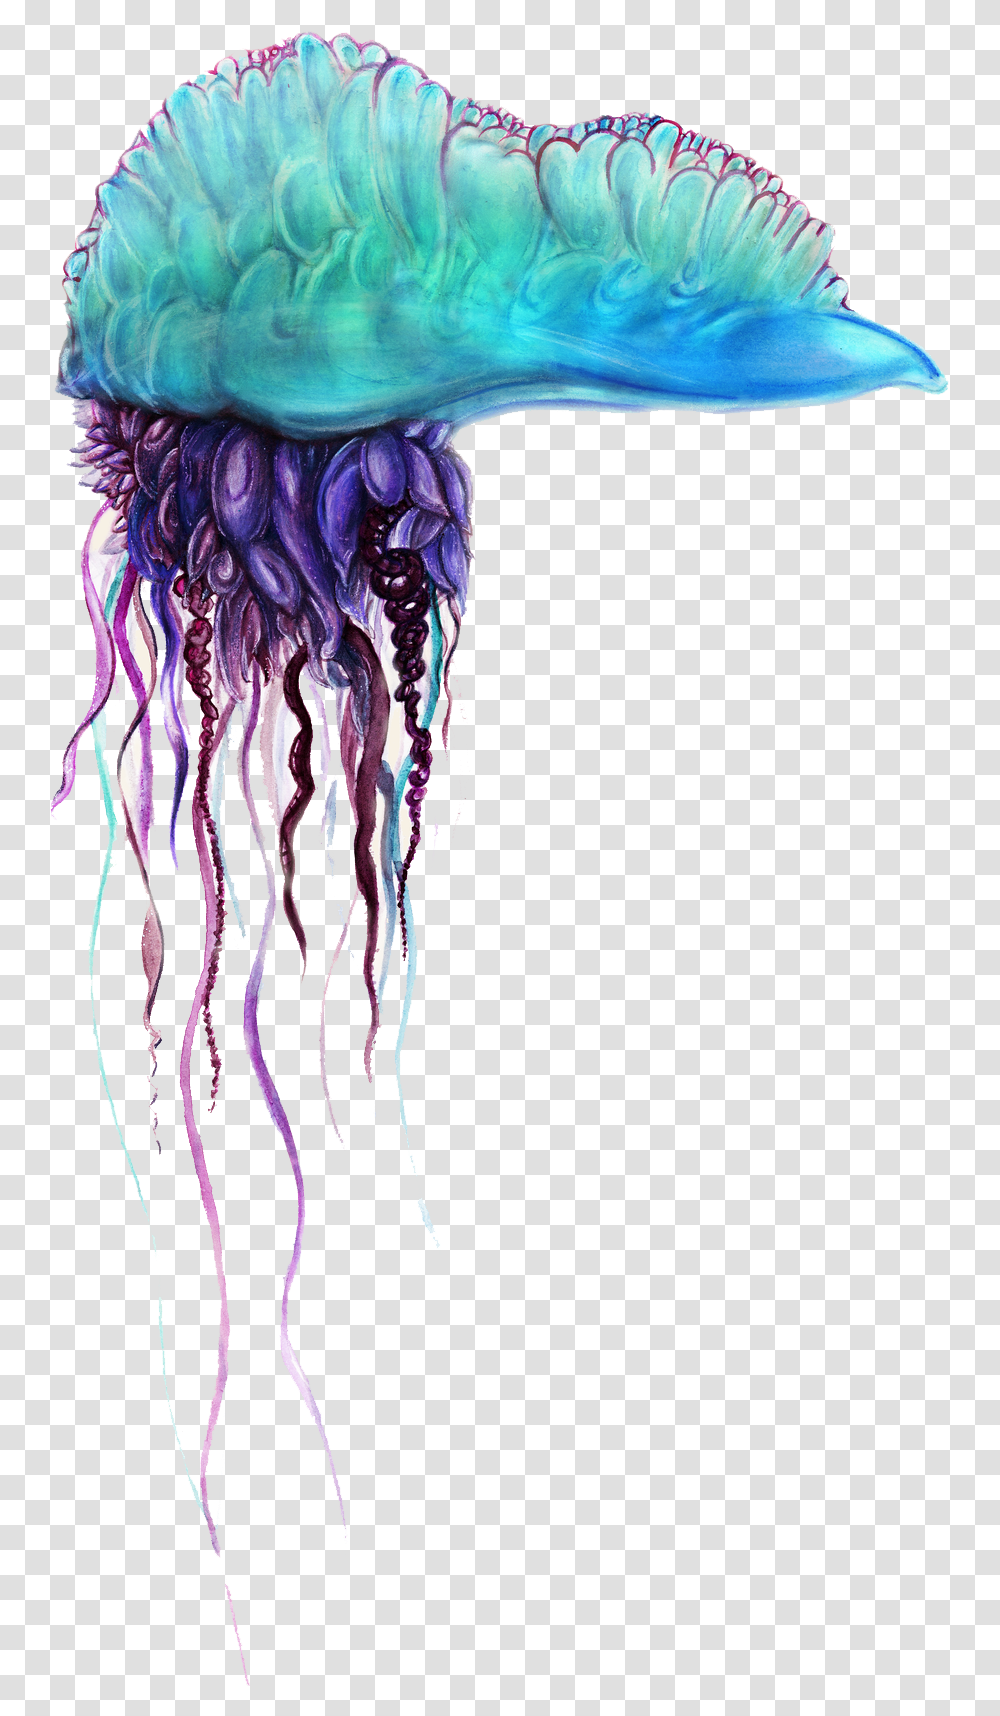 Blue Bottle Jellyfish Pics Blue Bottle Jellyfish, Invertebrate, Sea Life, Animal, Fungus Transparent Png